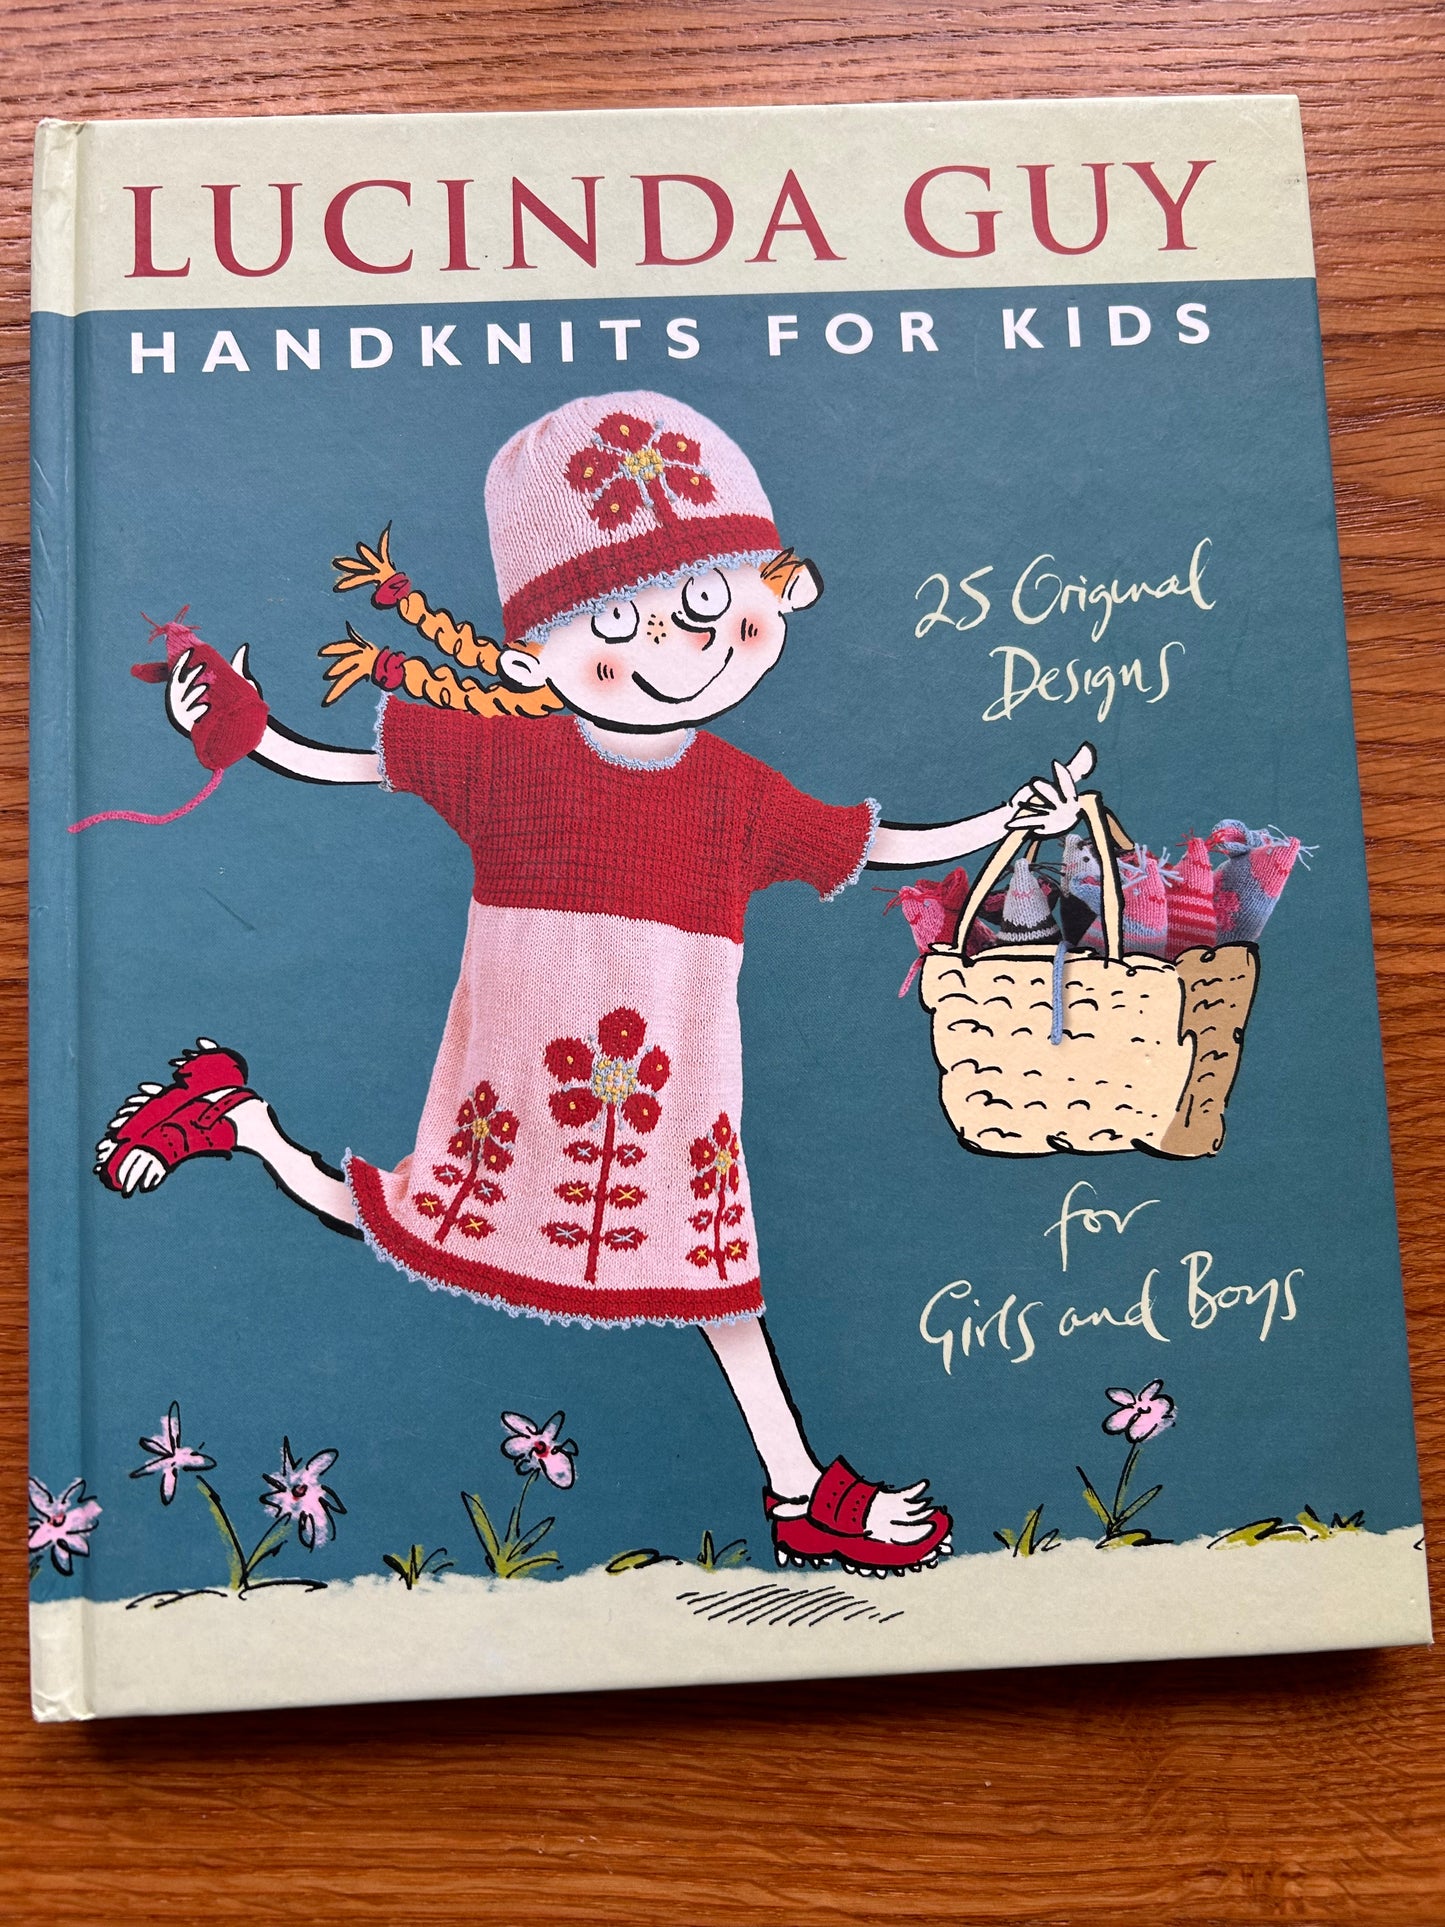 Handknits for Kids